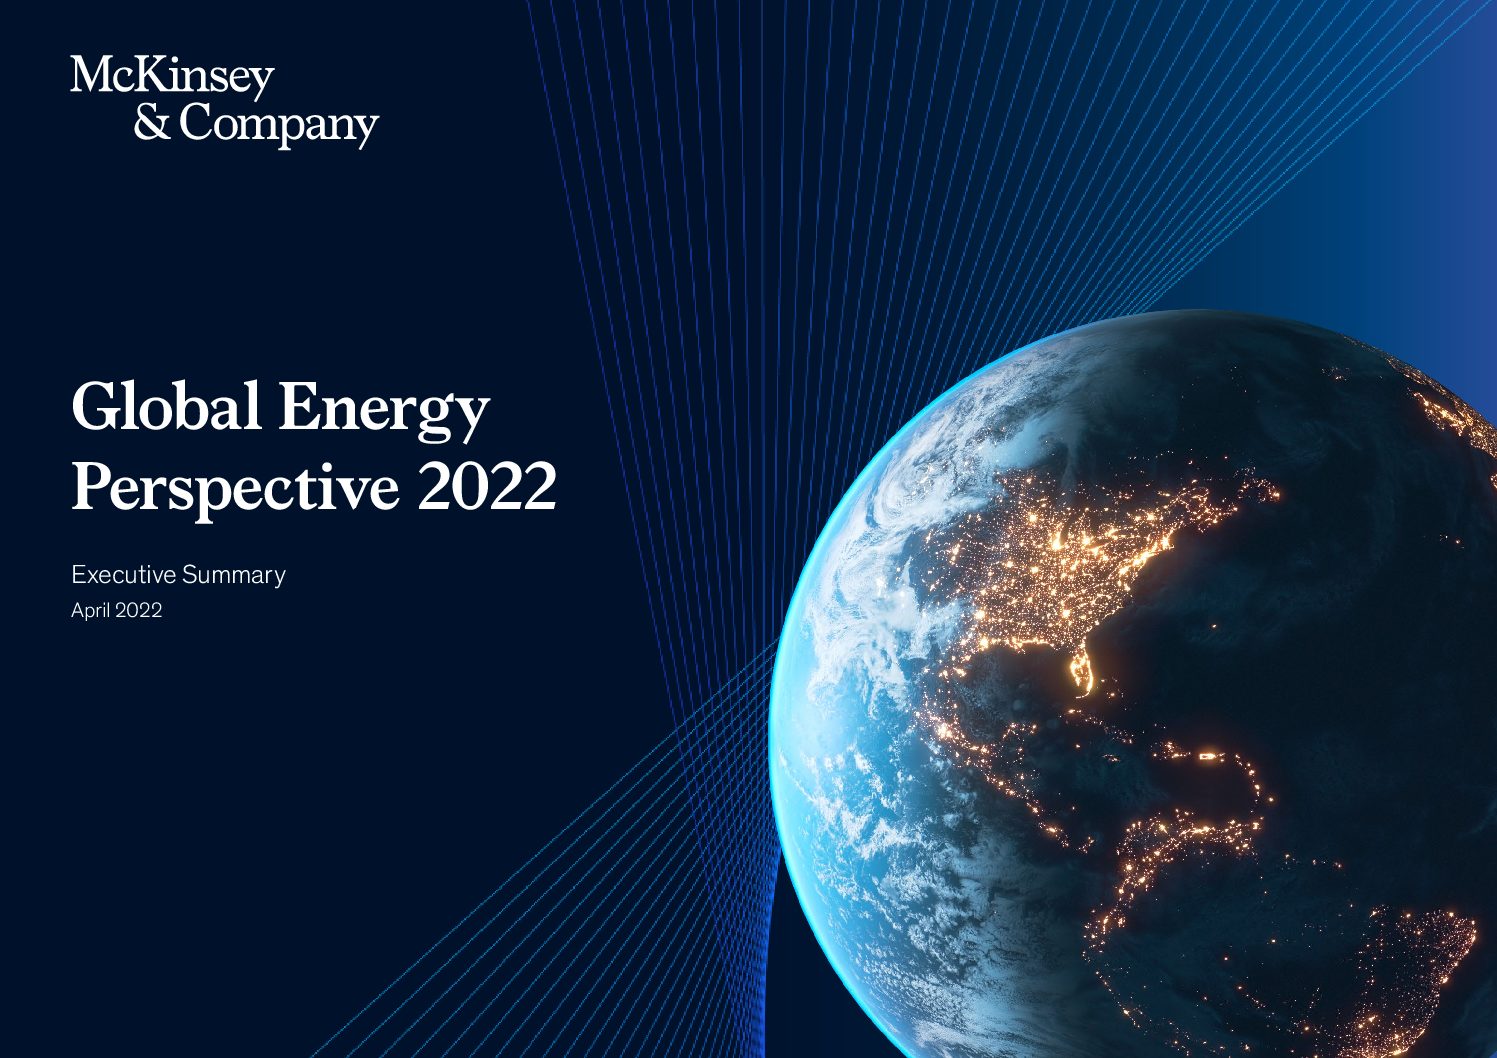 Global Energy Perspective 2022 – McKinsey & Company